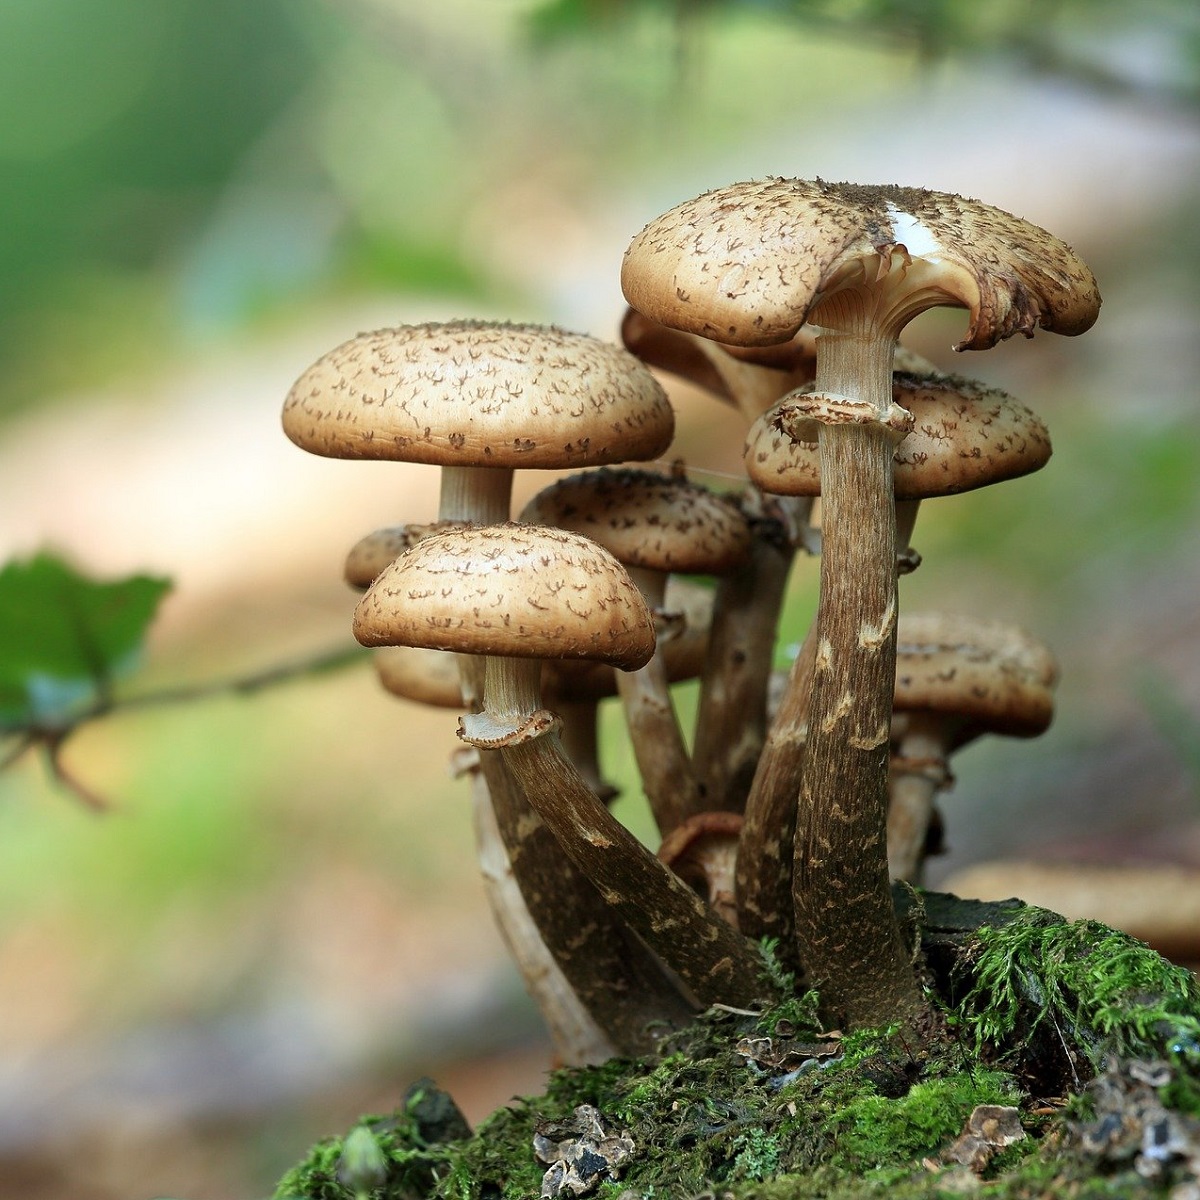 MEDICINAL MUSHROOMS – The List of 14 Most Popular Medicinal Mushrooms and Their Beneficial Effects